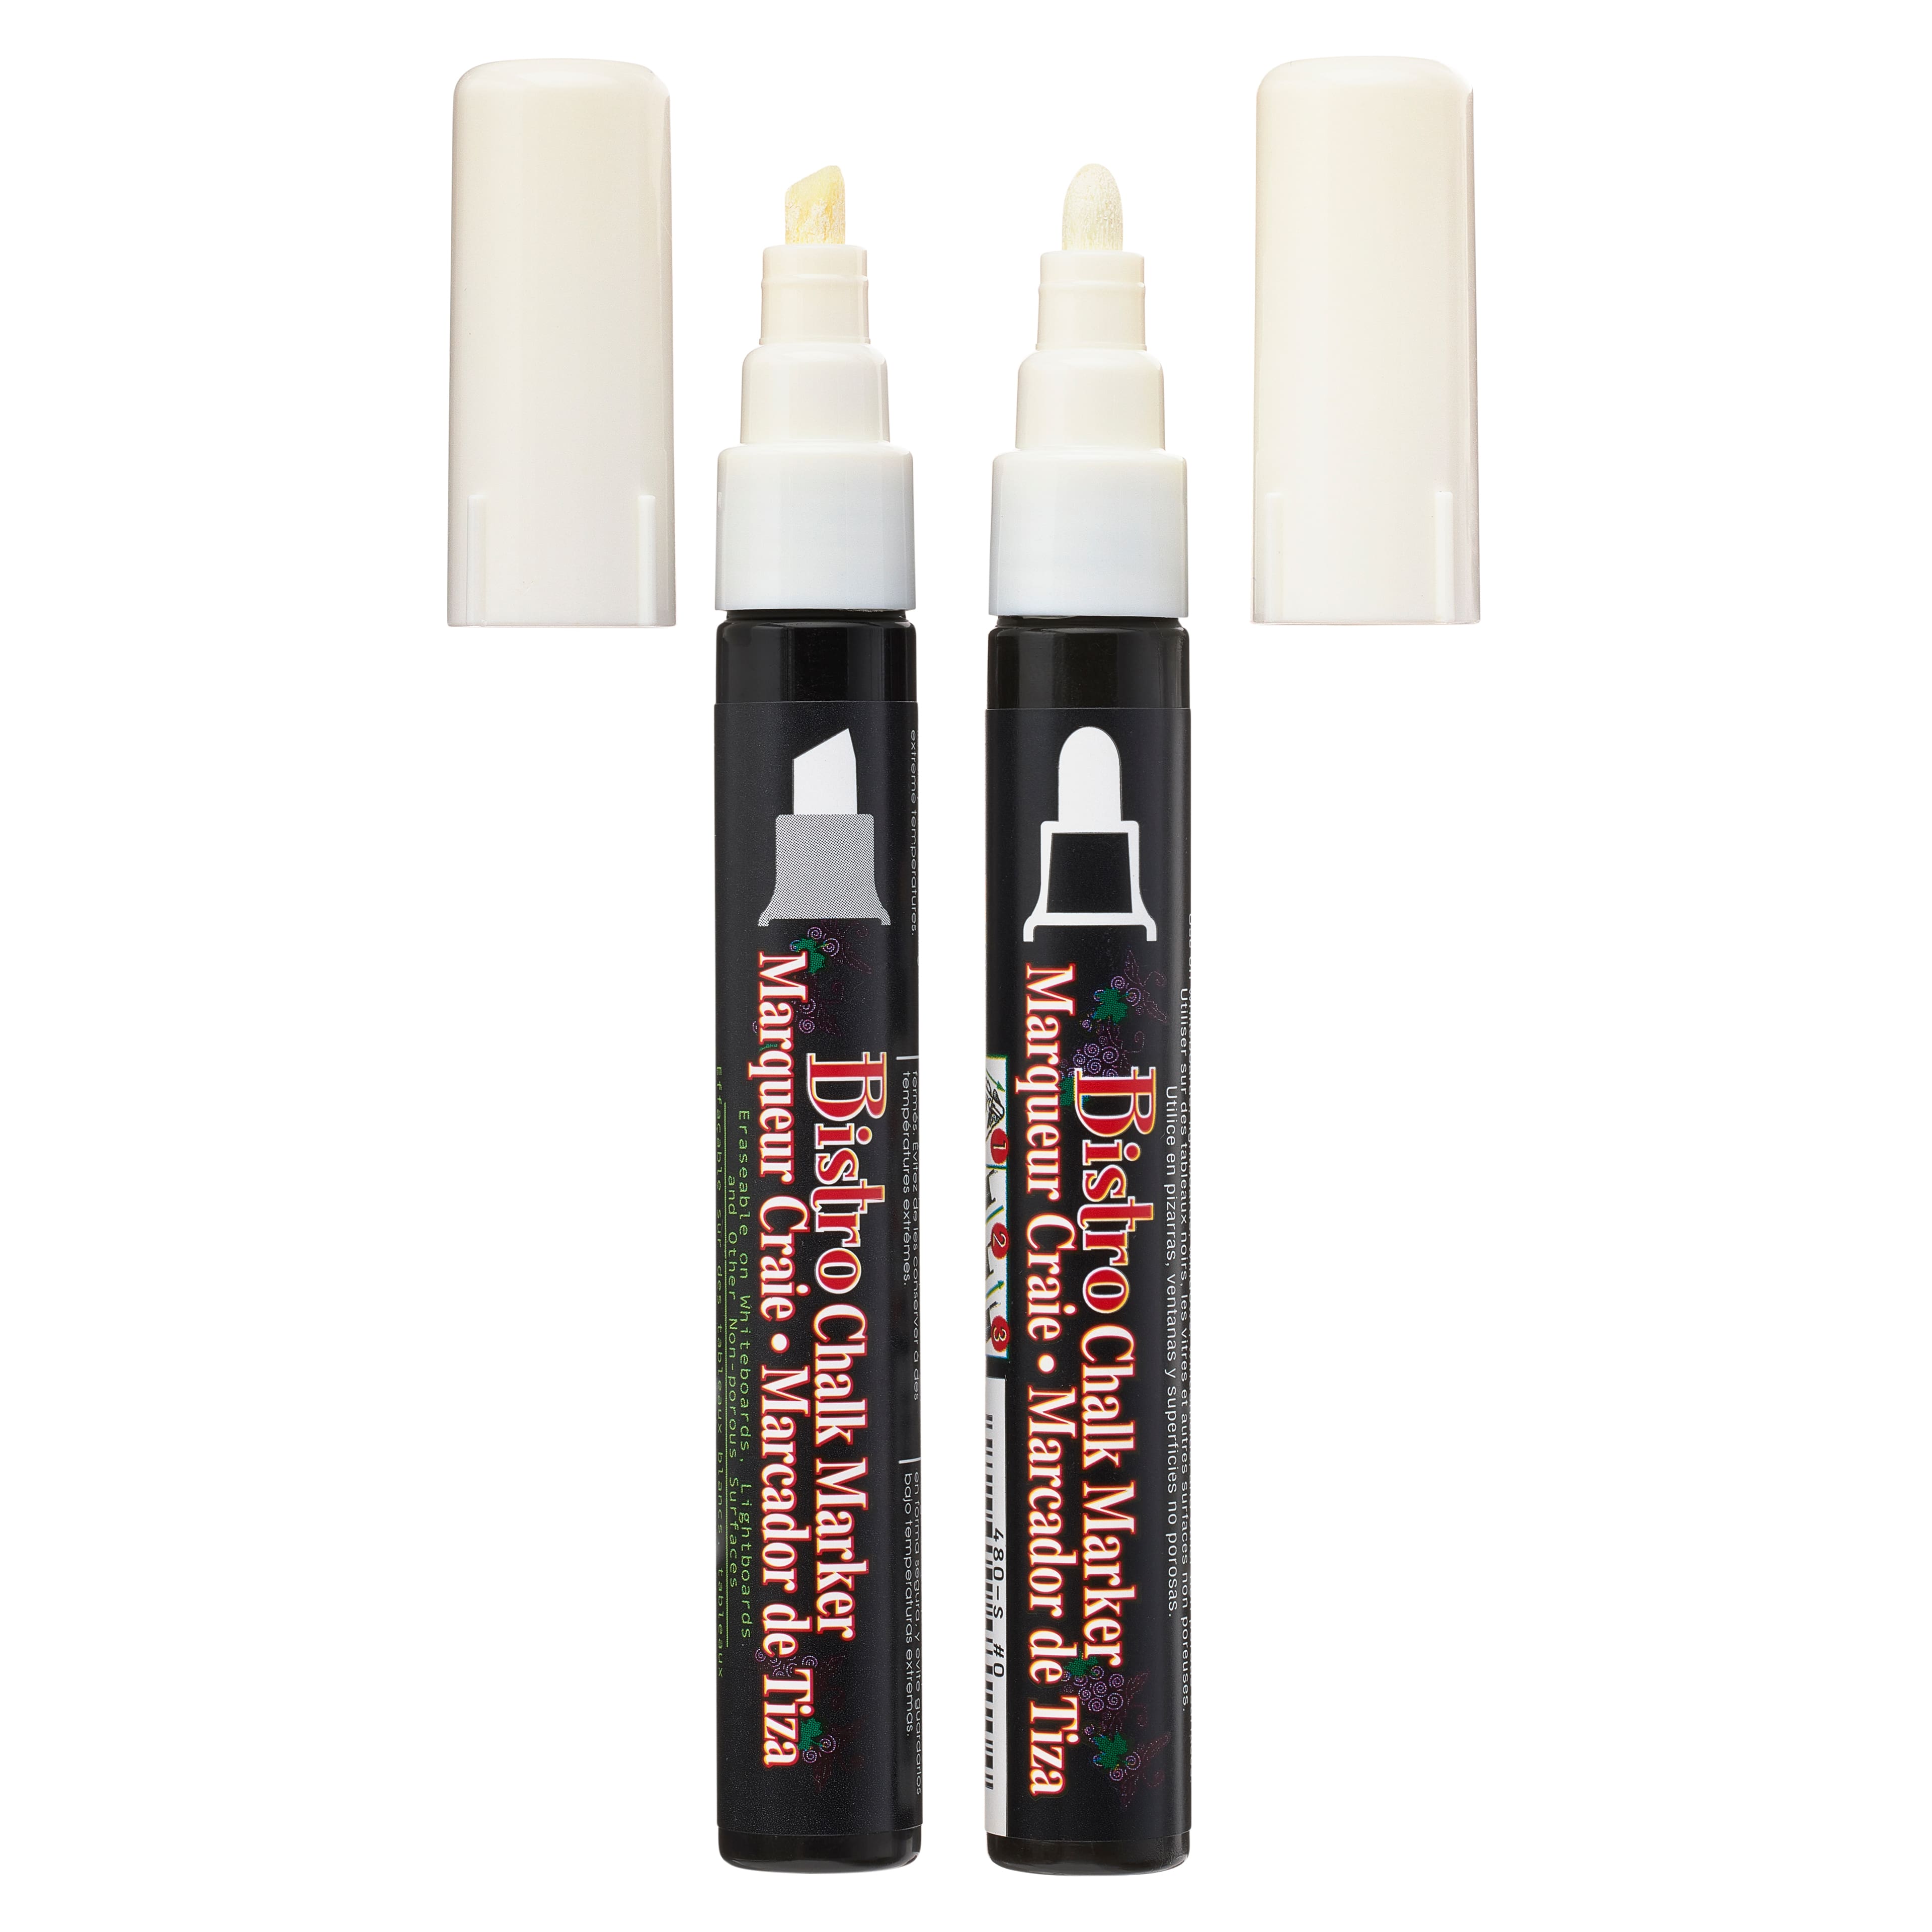 Marvy Uchida® Bistro Chalk Markers, Extra Fine Tip, White, Pack of